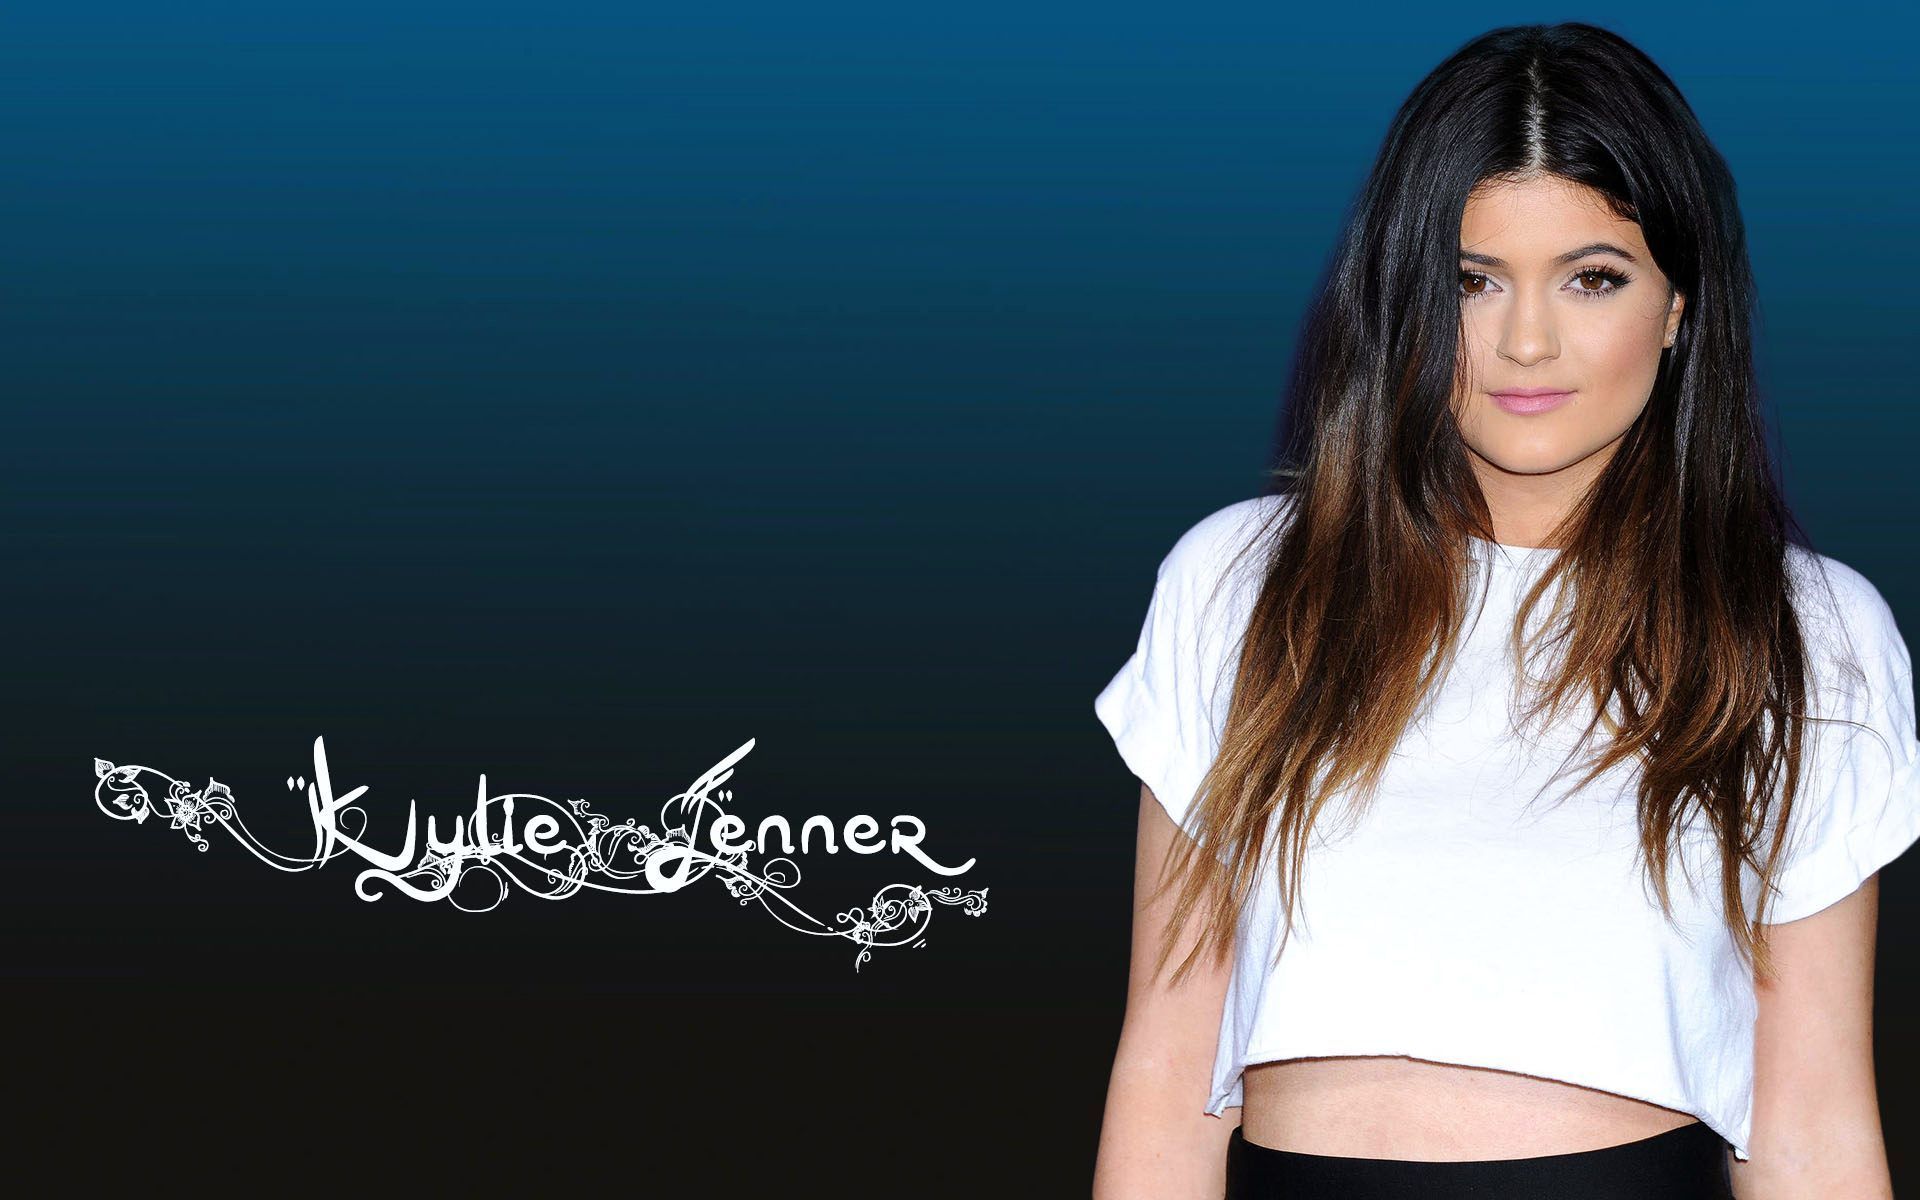 Kylie Jenner Desktop Wallpaper 2014. Kylie jenner photo, Actresses, Kylie jenner